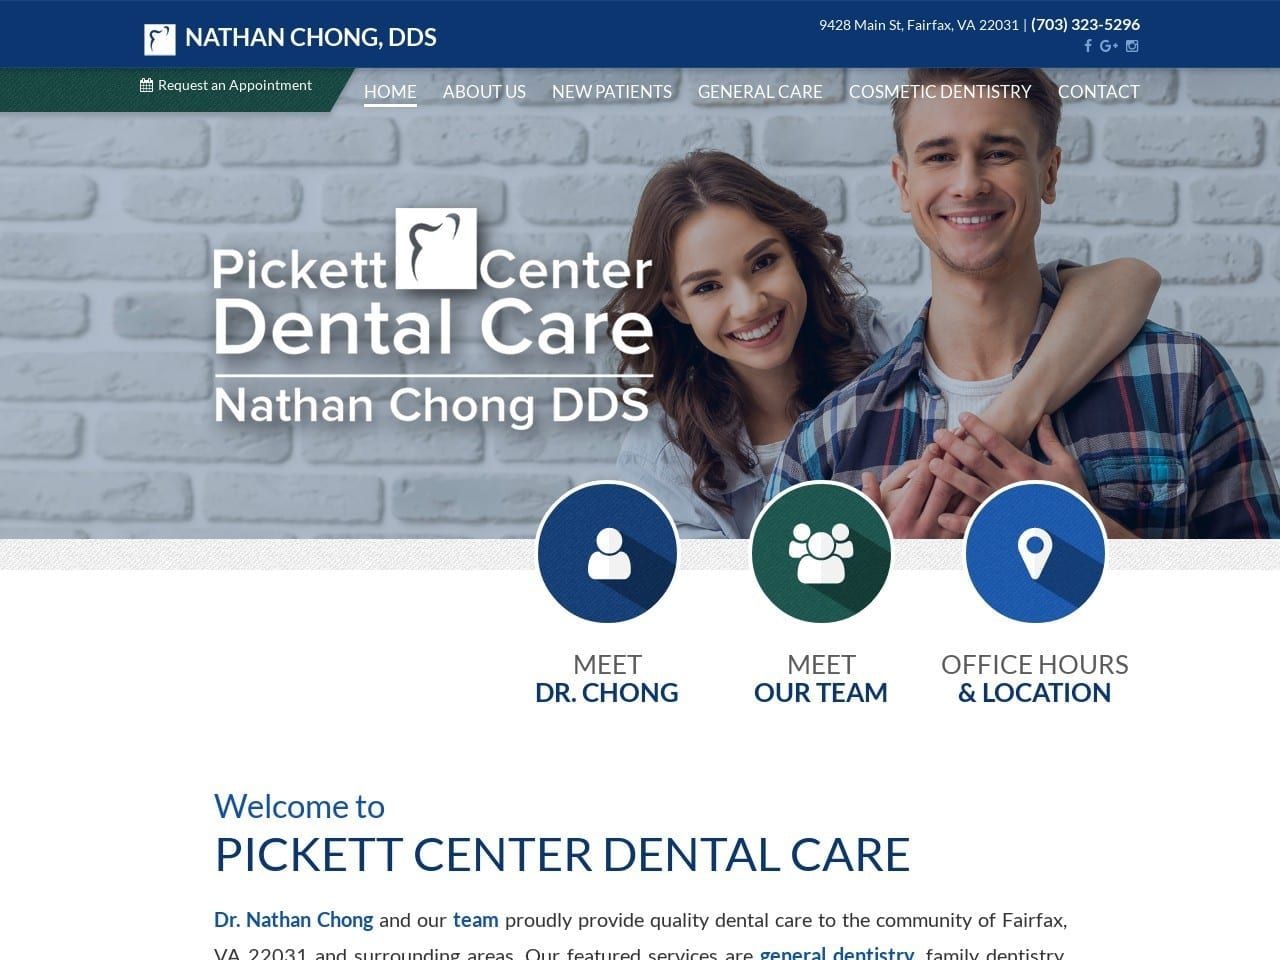 Pickett Center Dental Care Website Screenshot from pickettcenterdentalcare.com